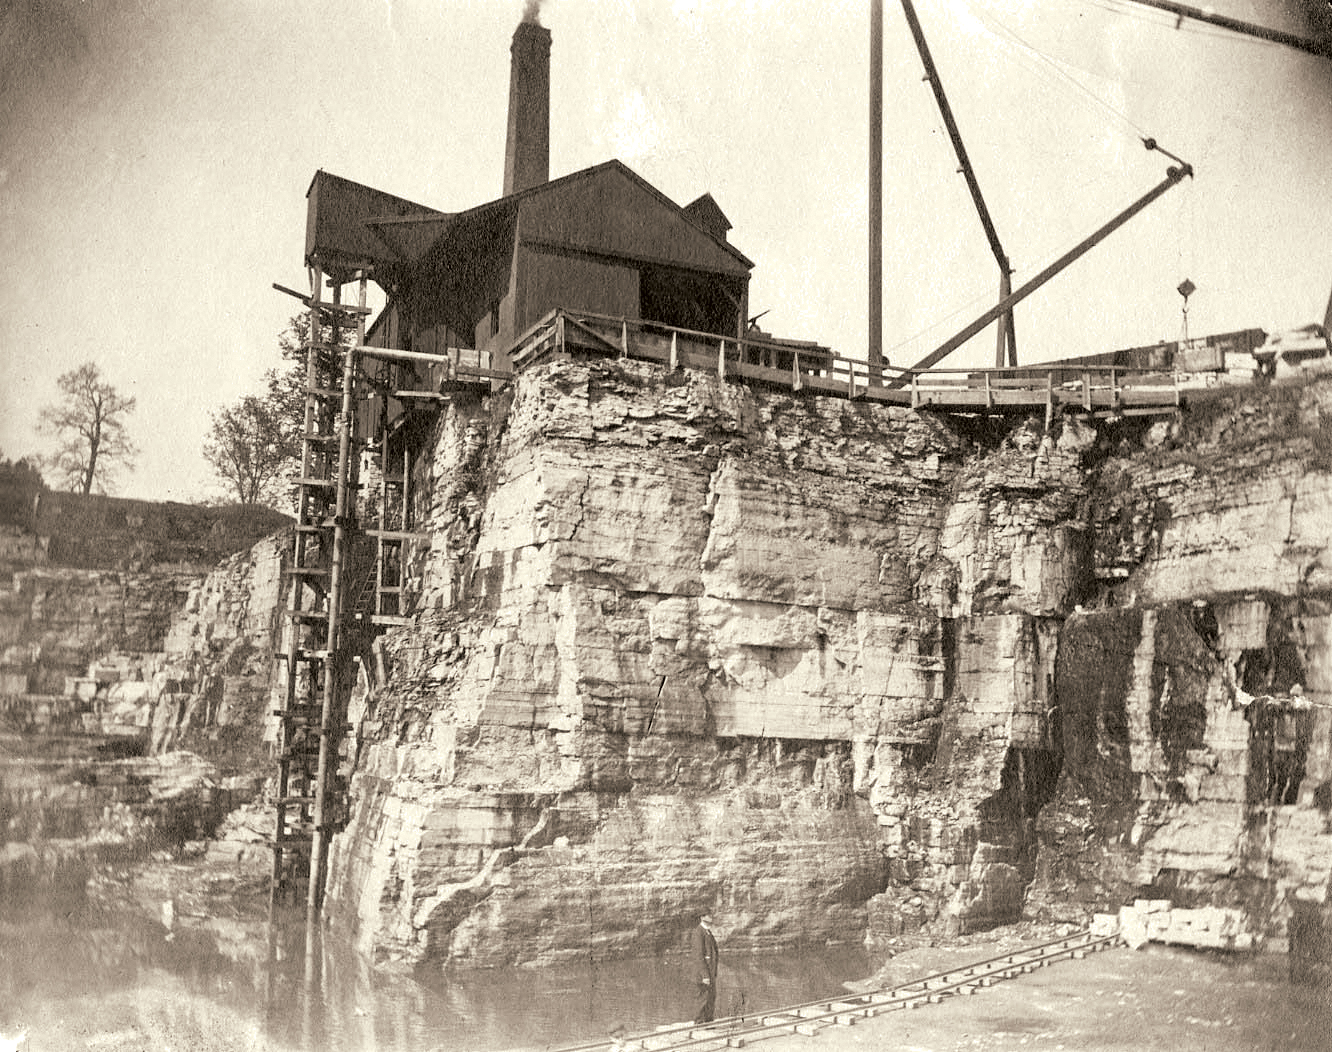 Naperville quarry, late nineteenth century
